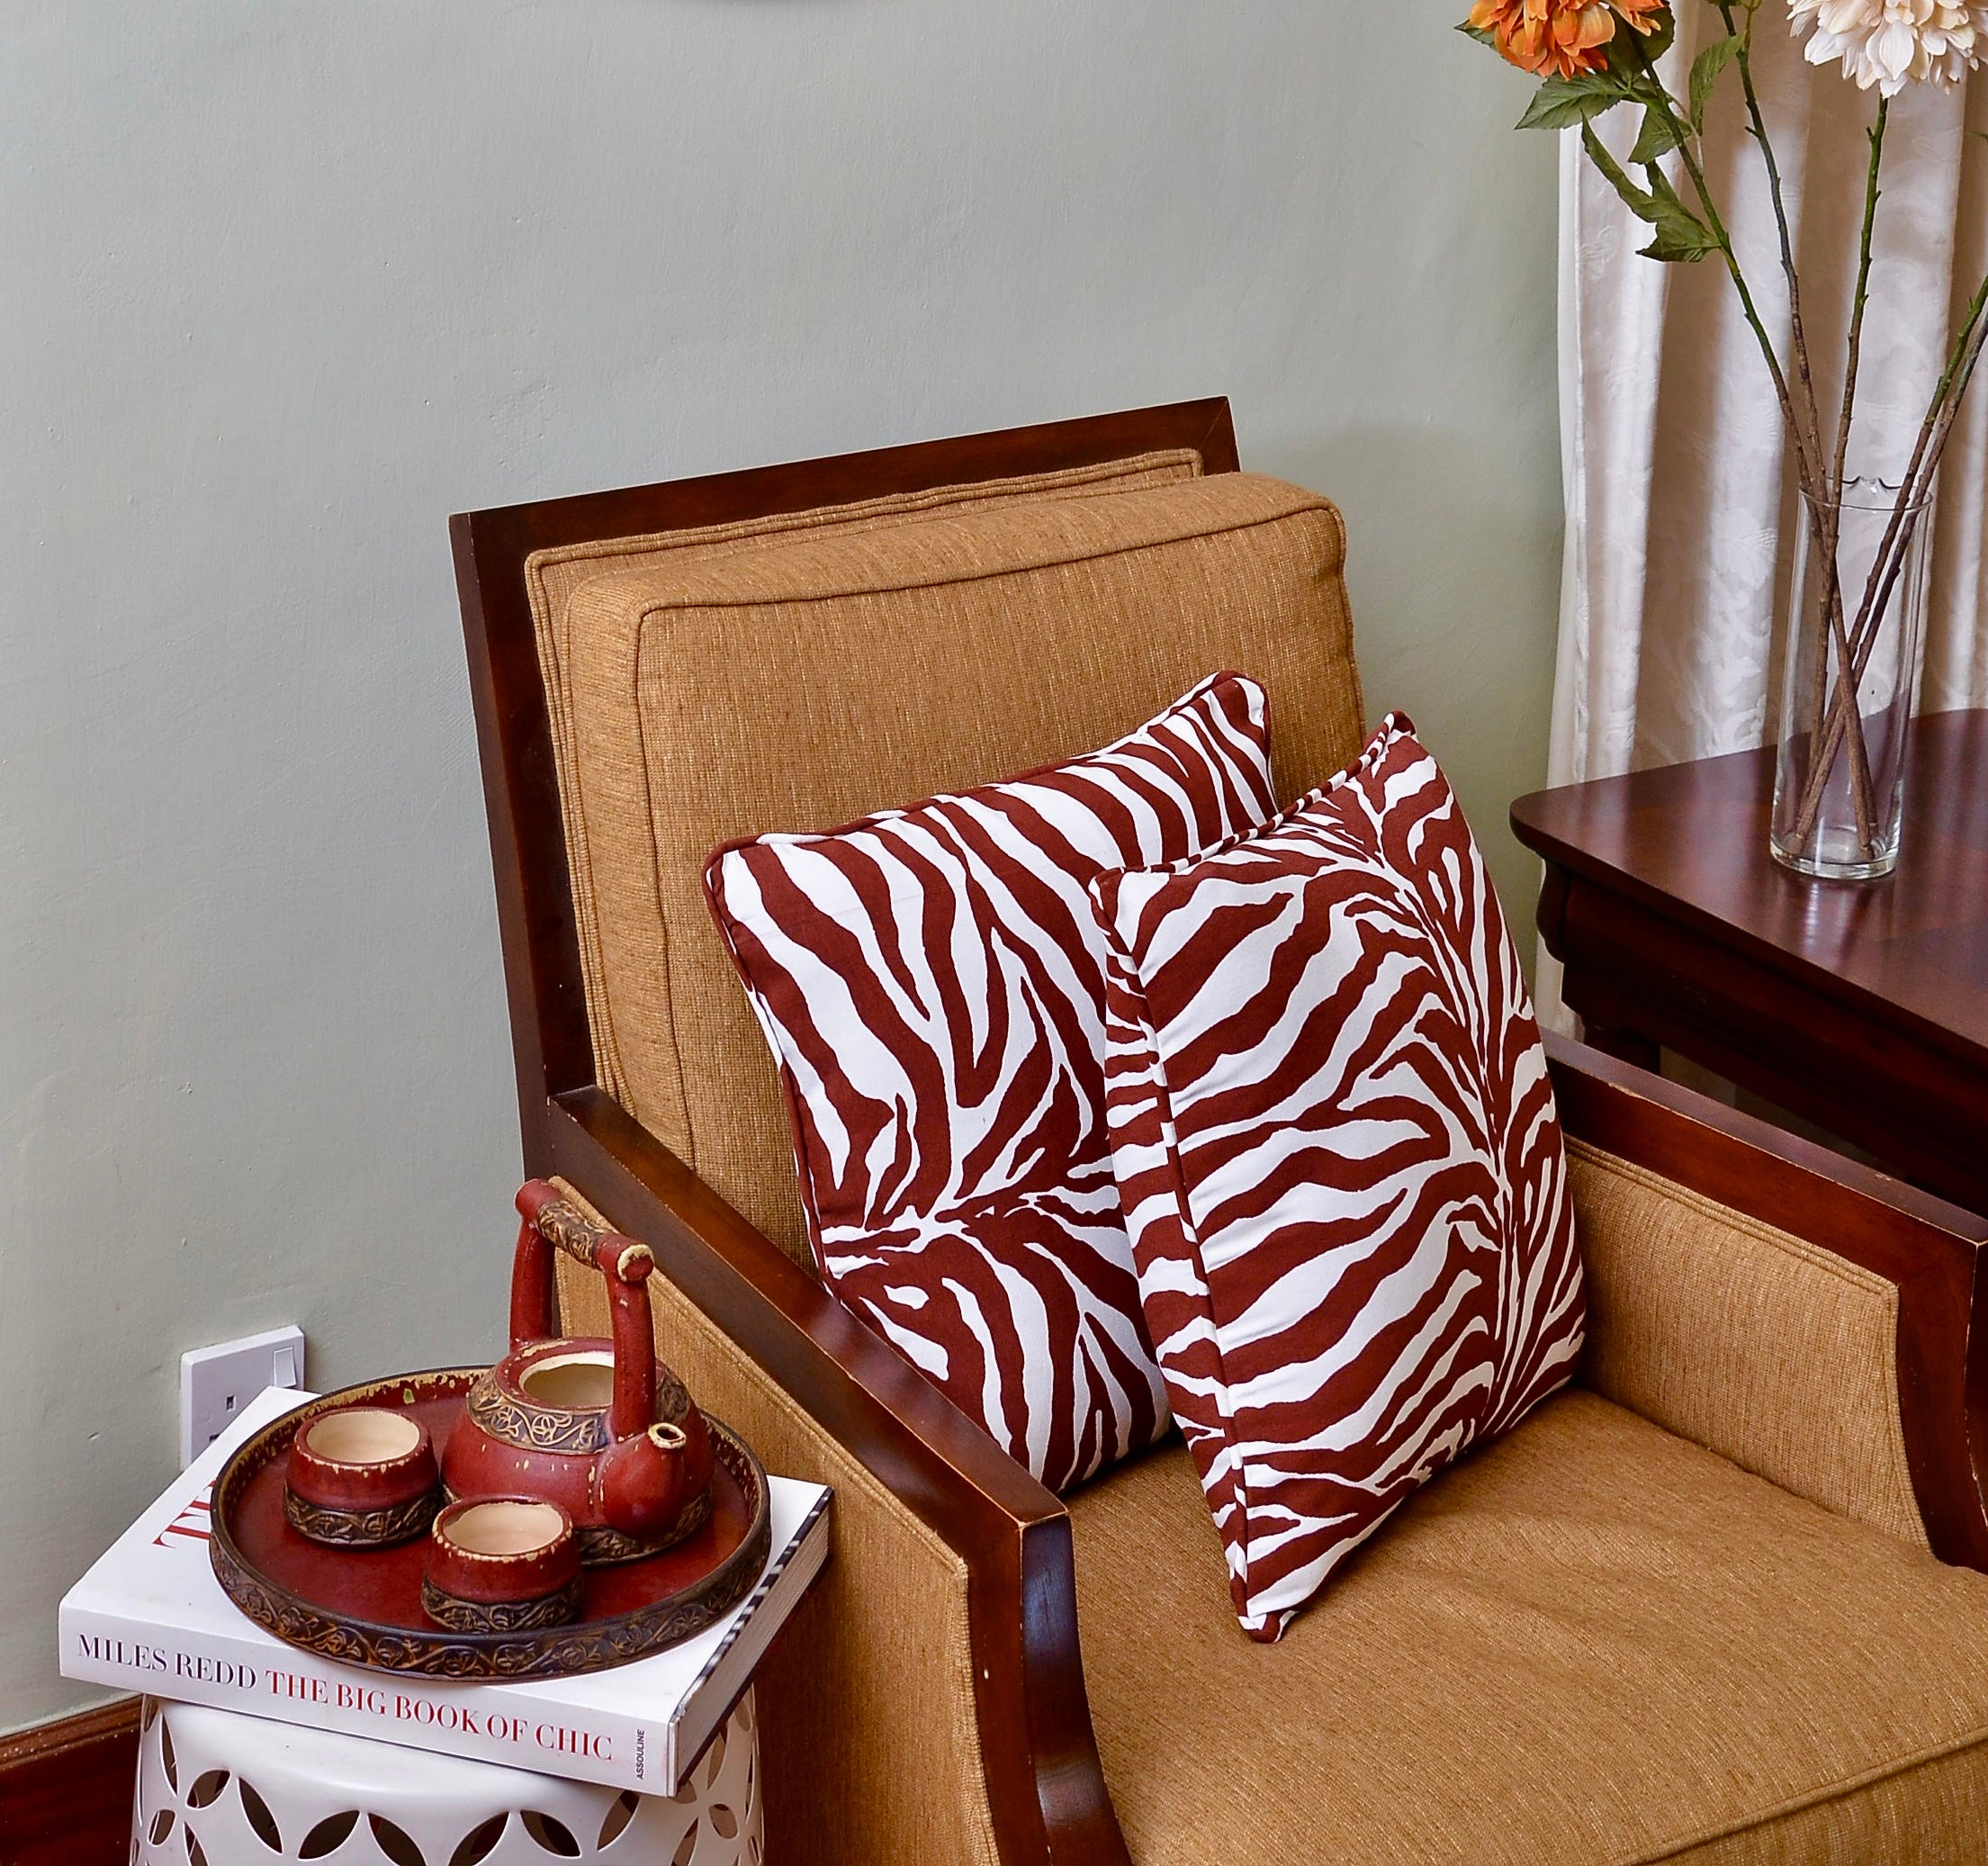 Buy Zebra Throw Pillows Online Cheap Decorative Throw Pillows